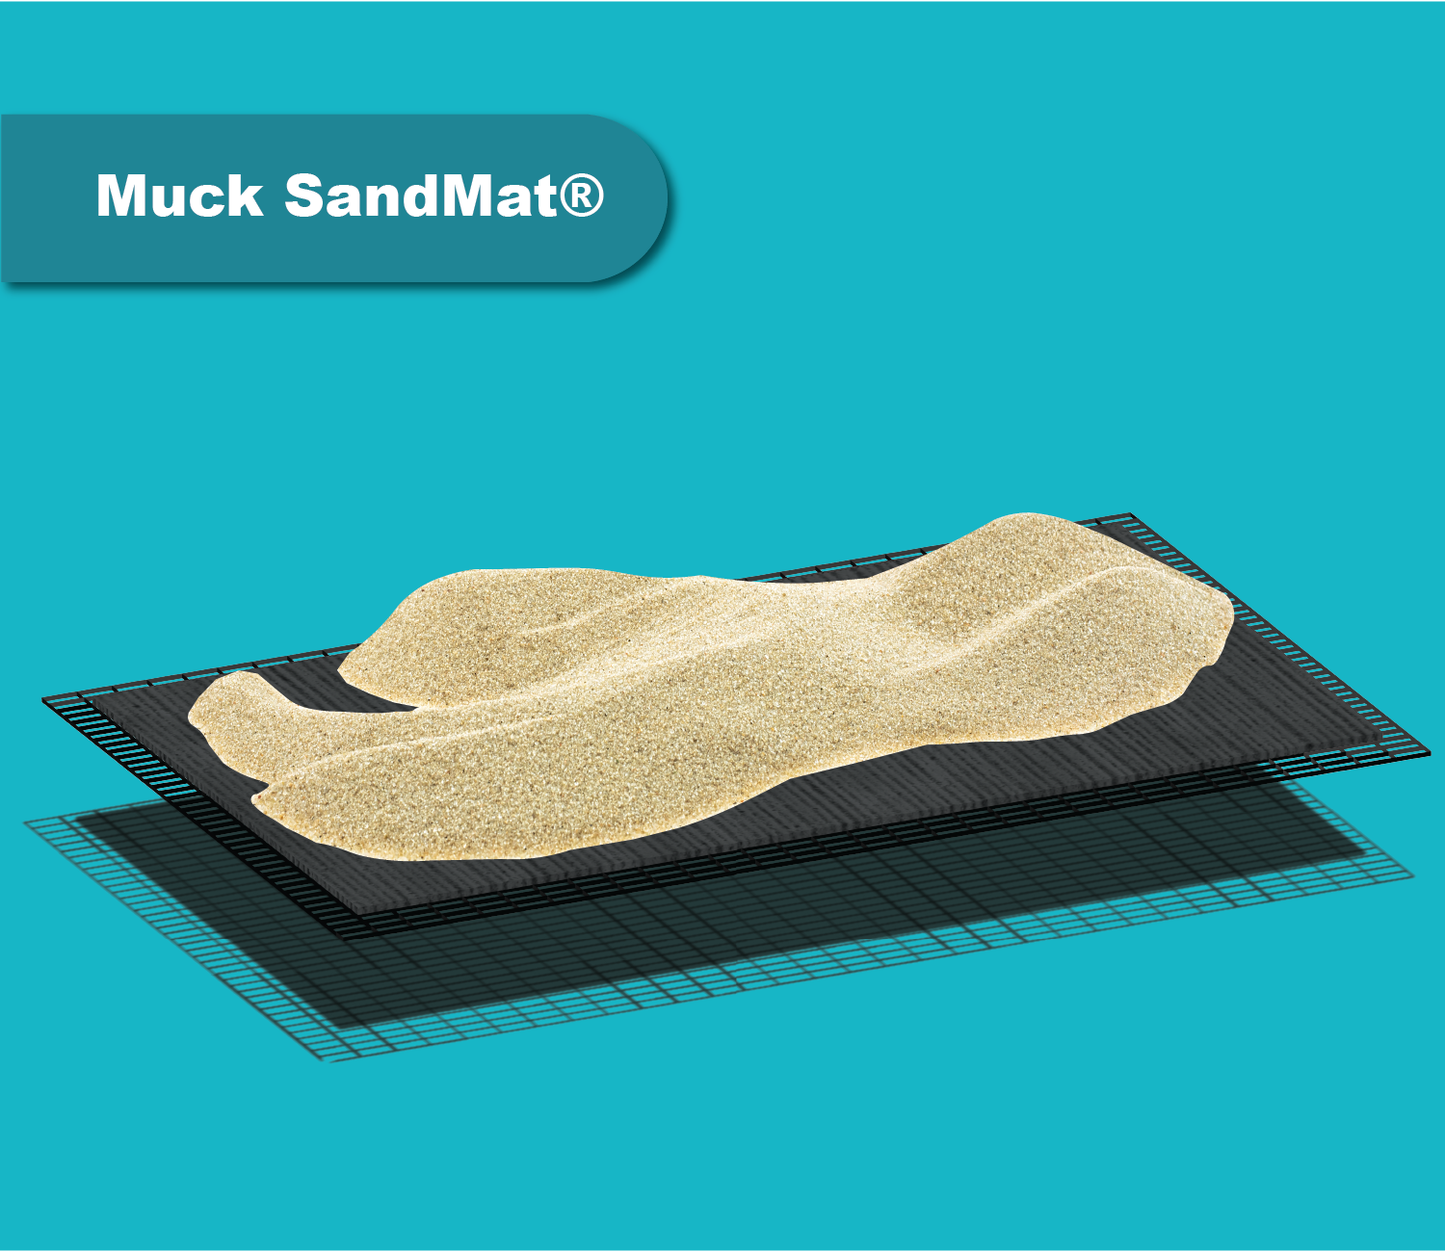 MuckSand Matin - Muck SandMat